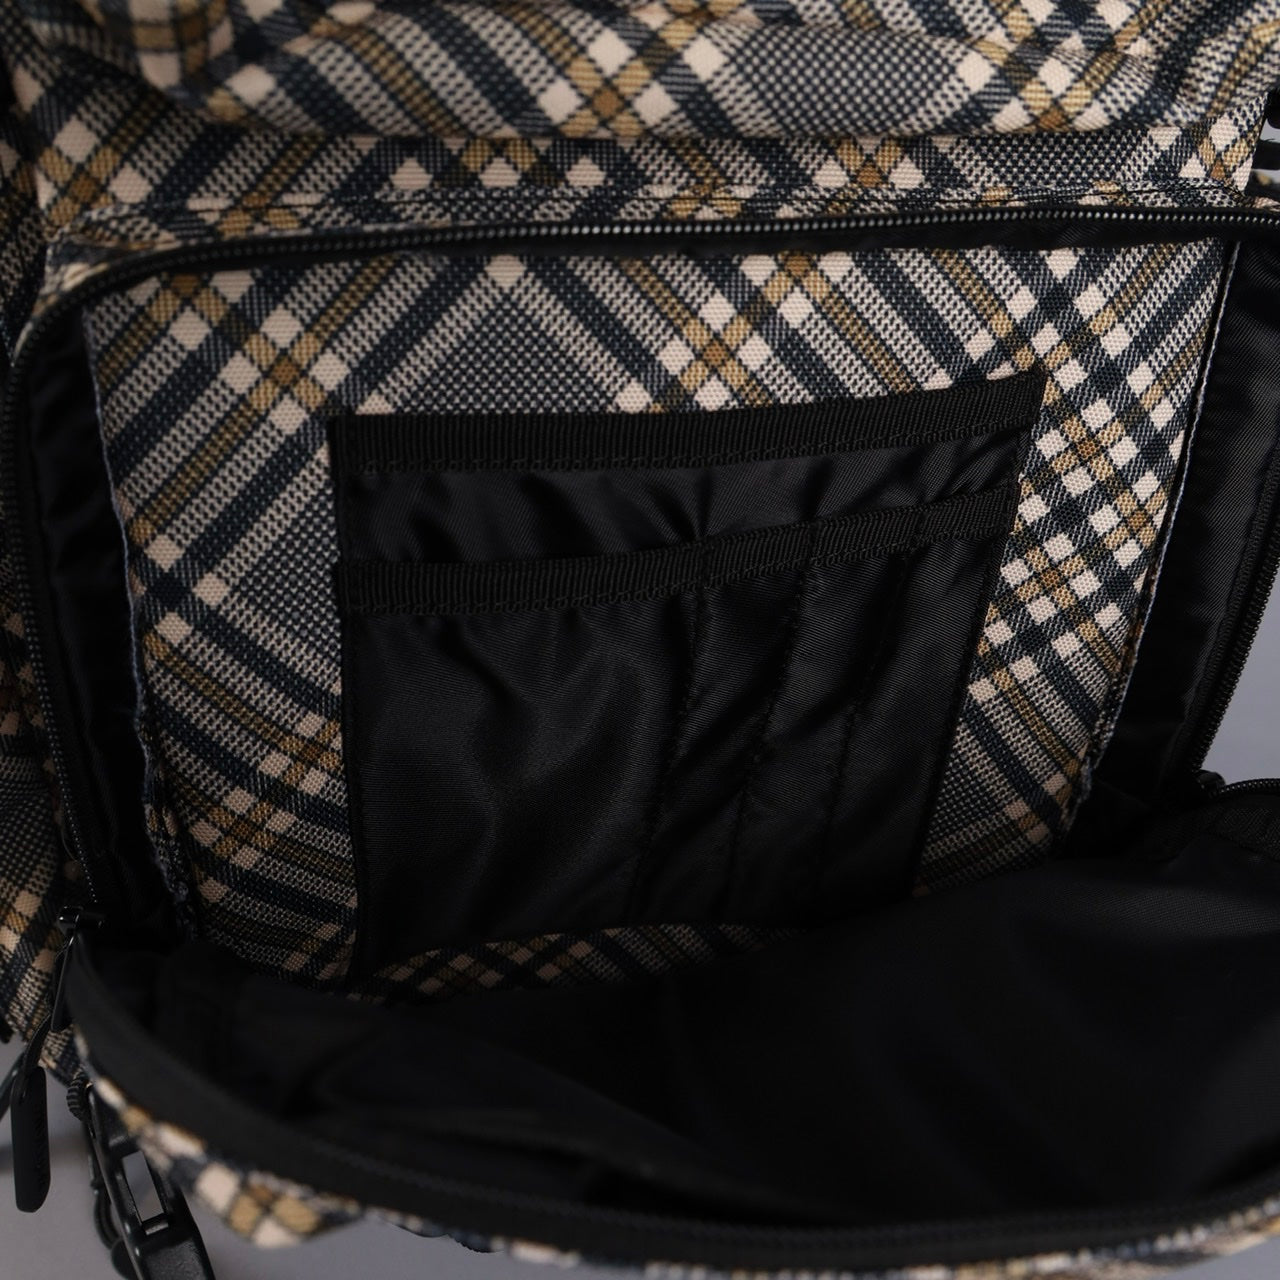 35L Backpack Black & Tan Plaid